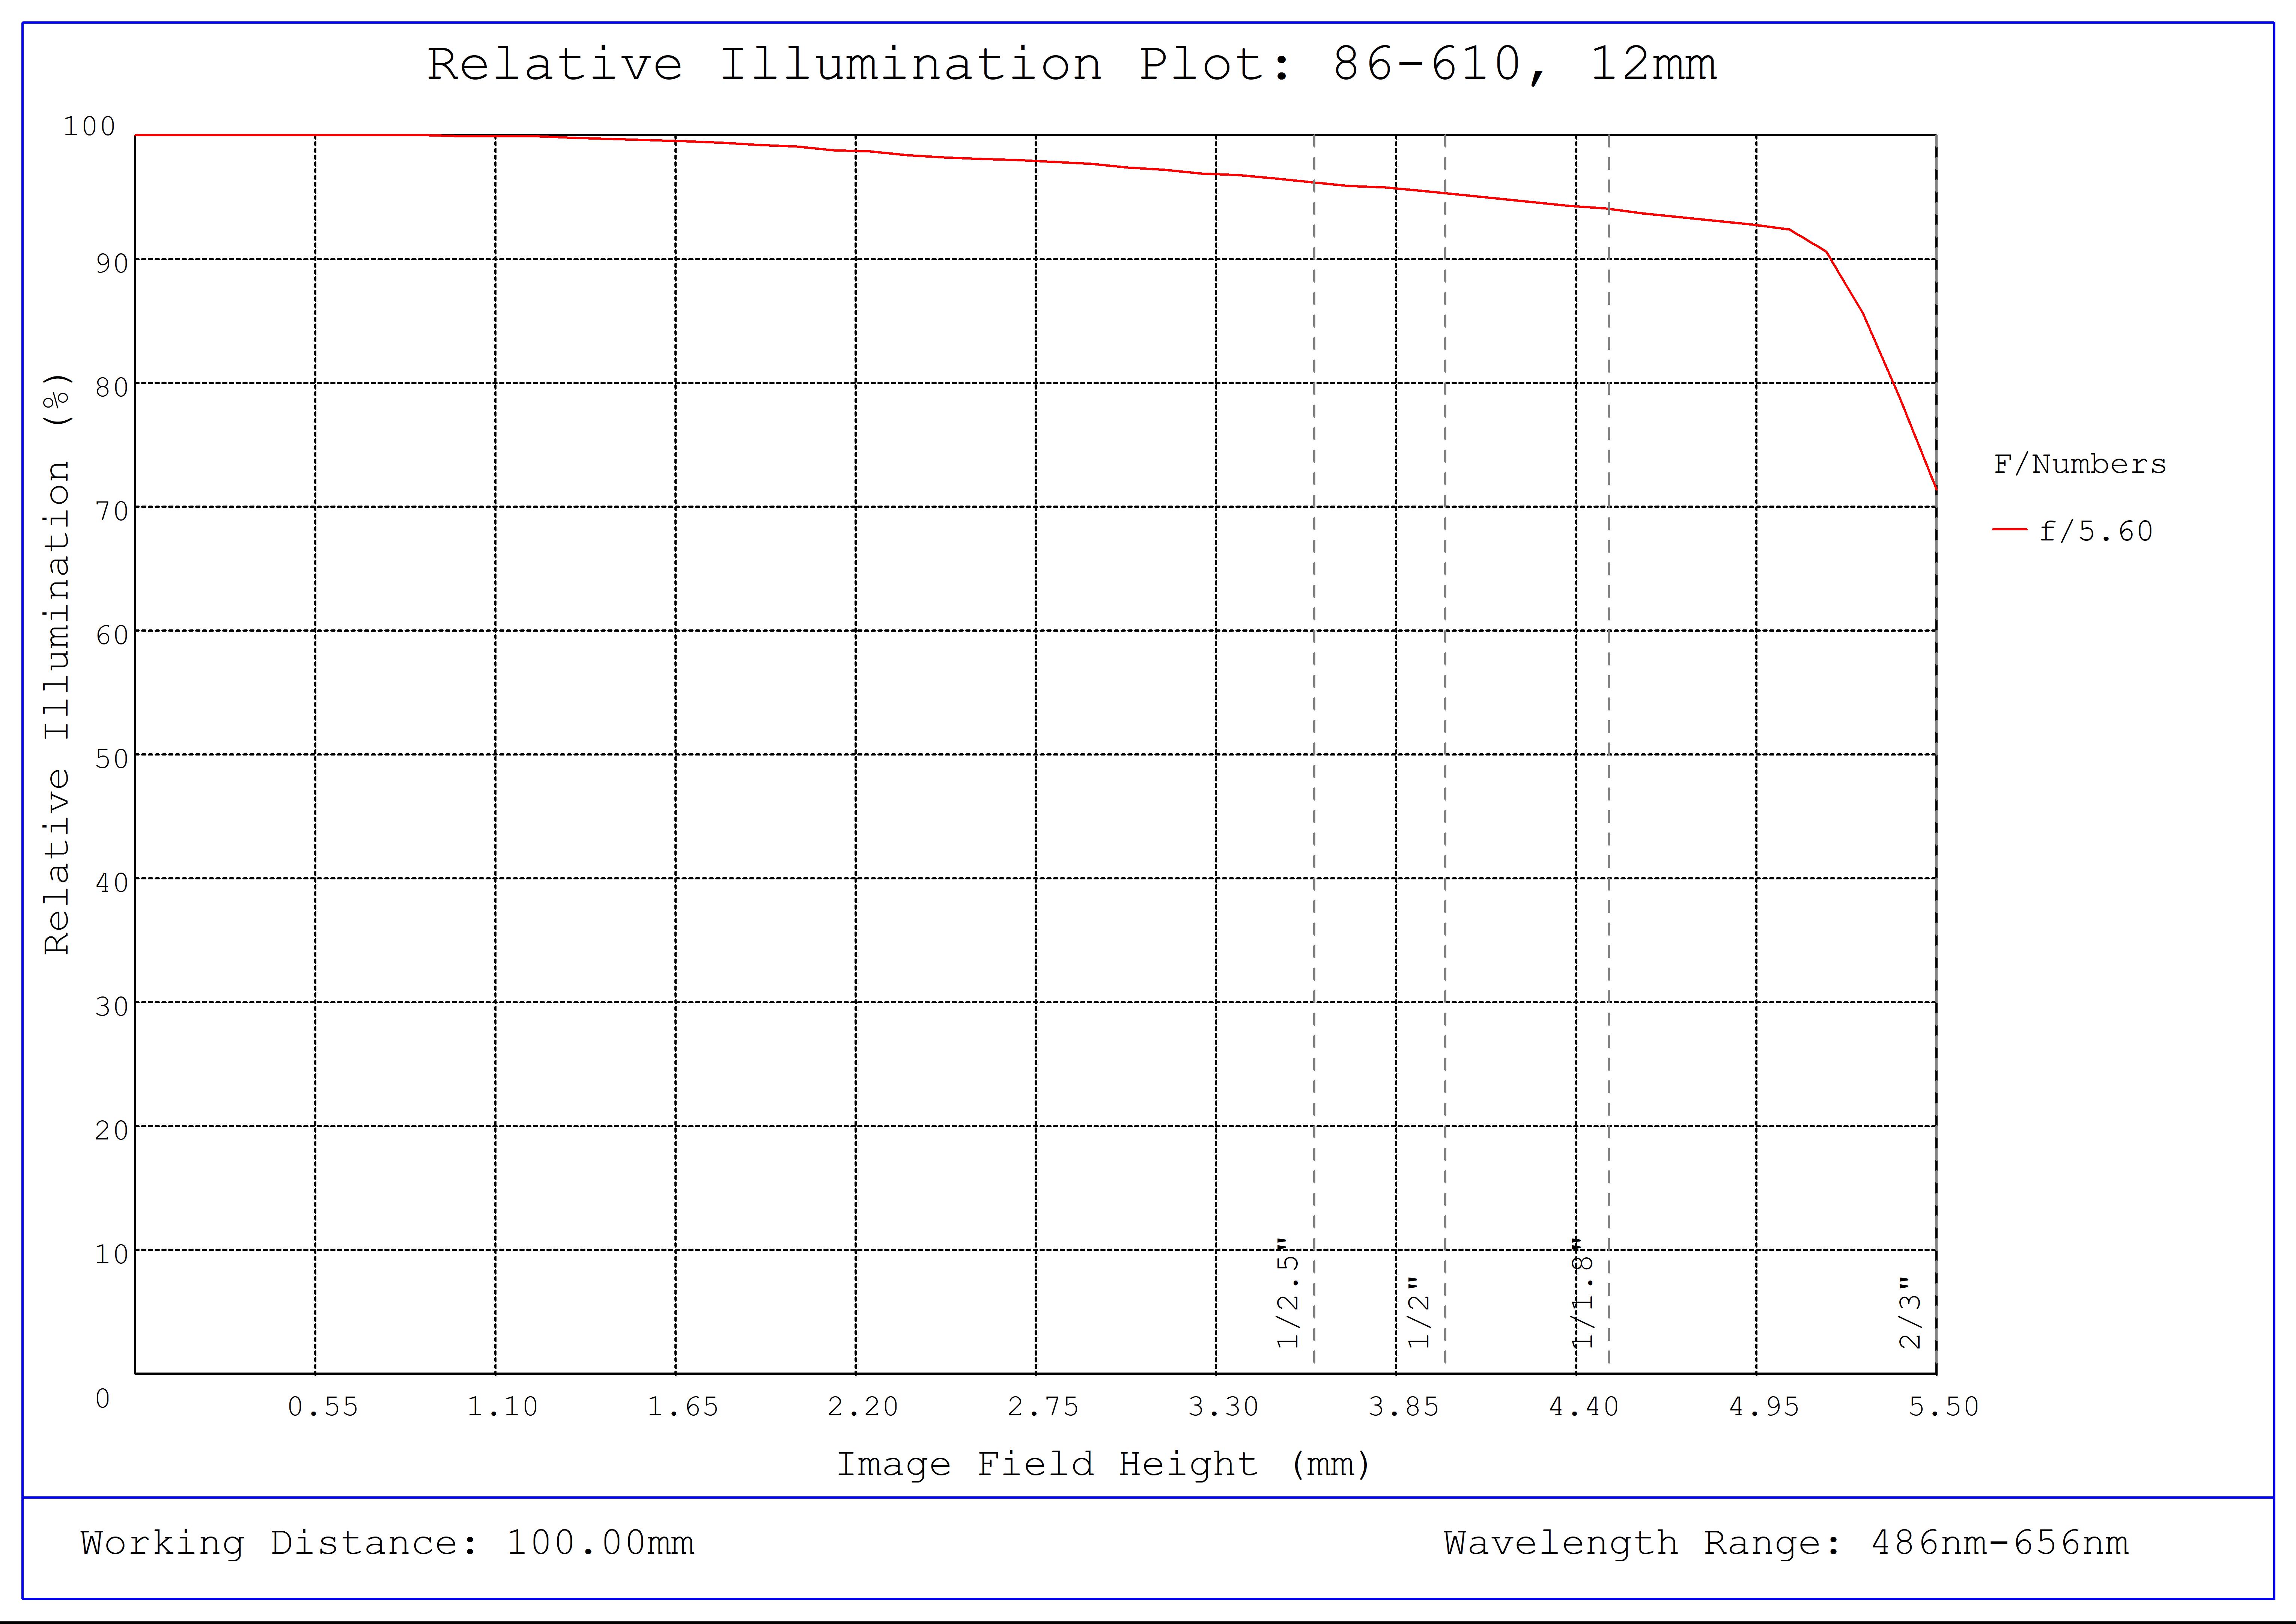 #86-610, 12mm, f/5.6 Ci Series Fixed Focal Length Lens, Relative Illumination Plot